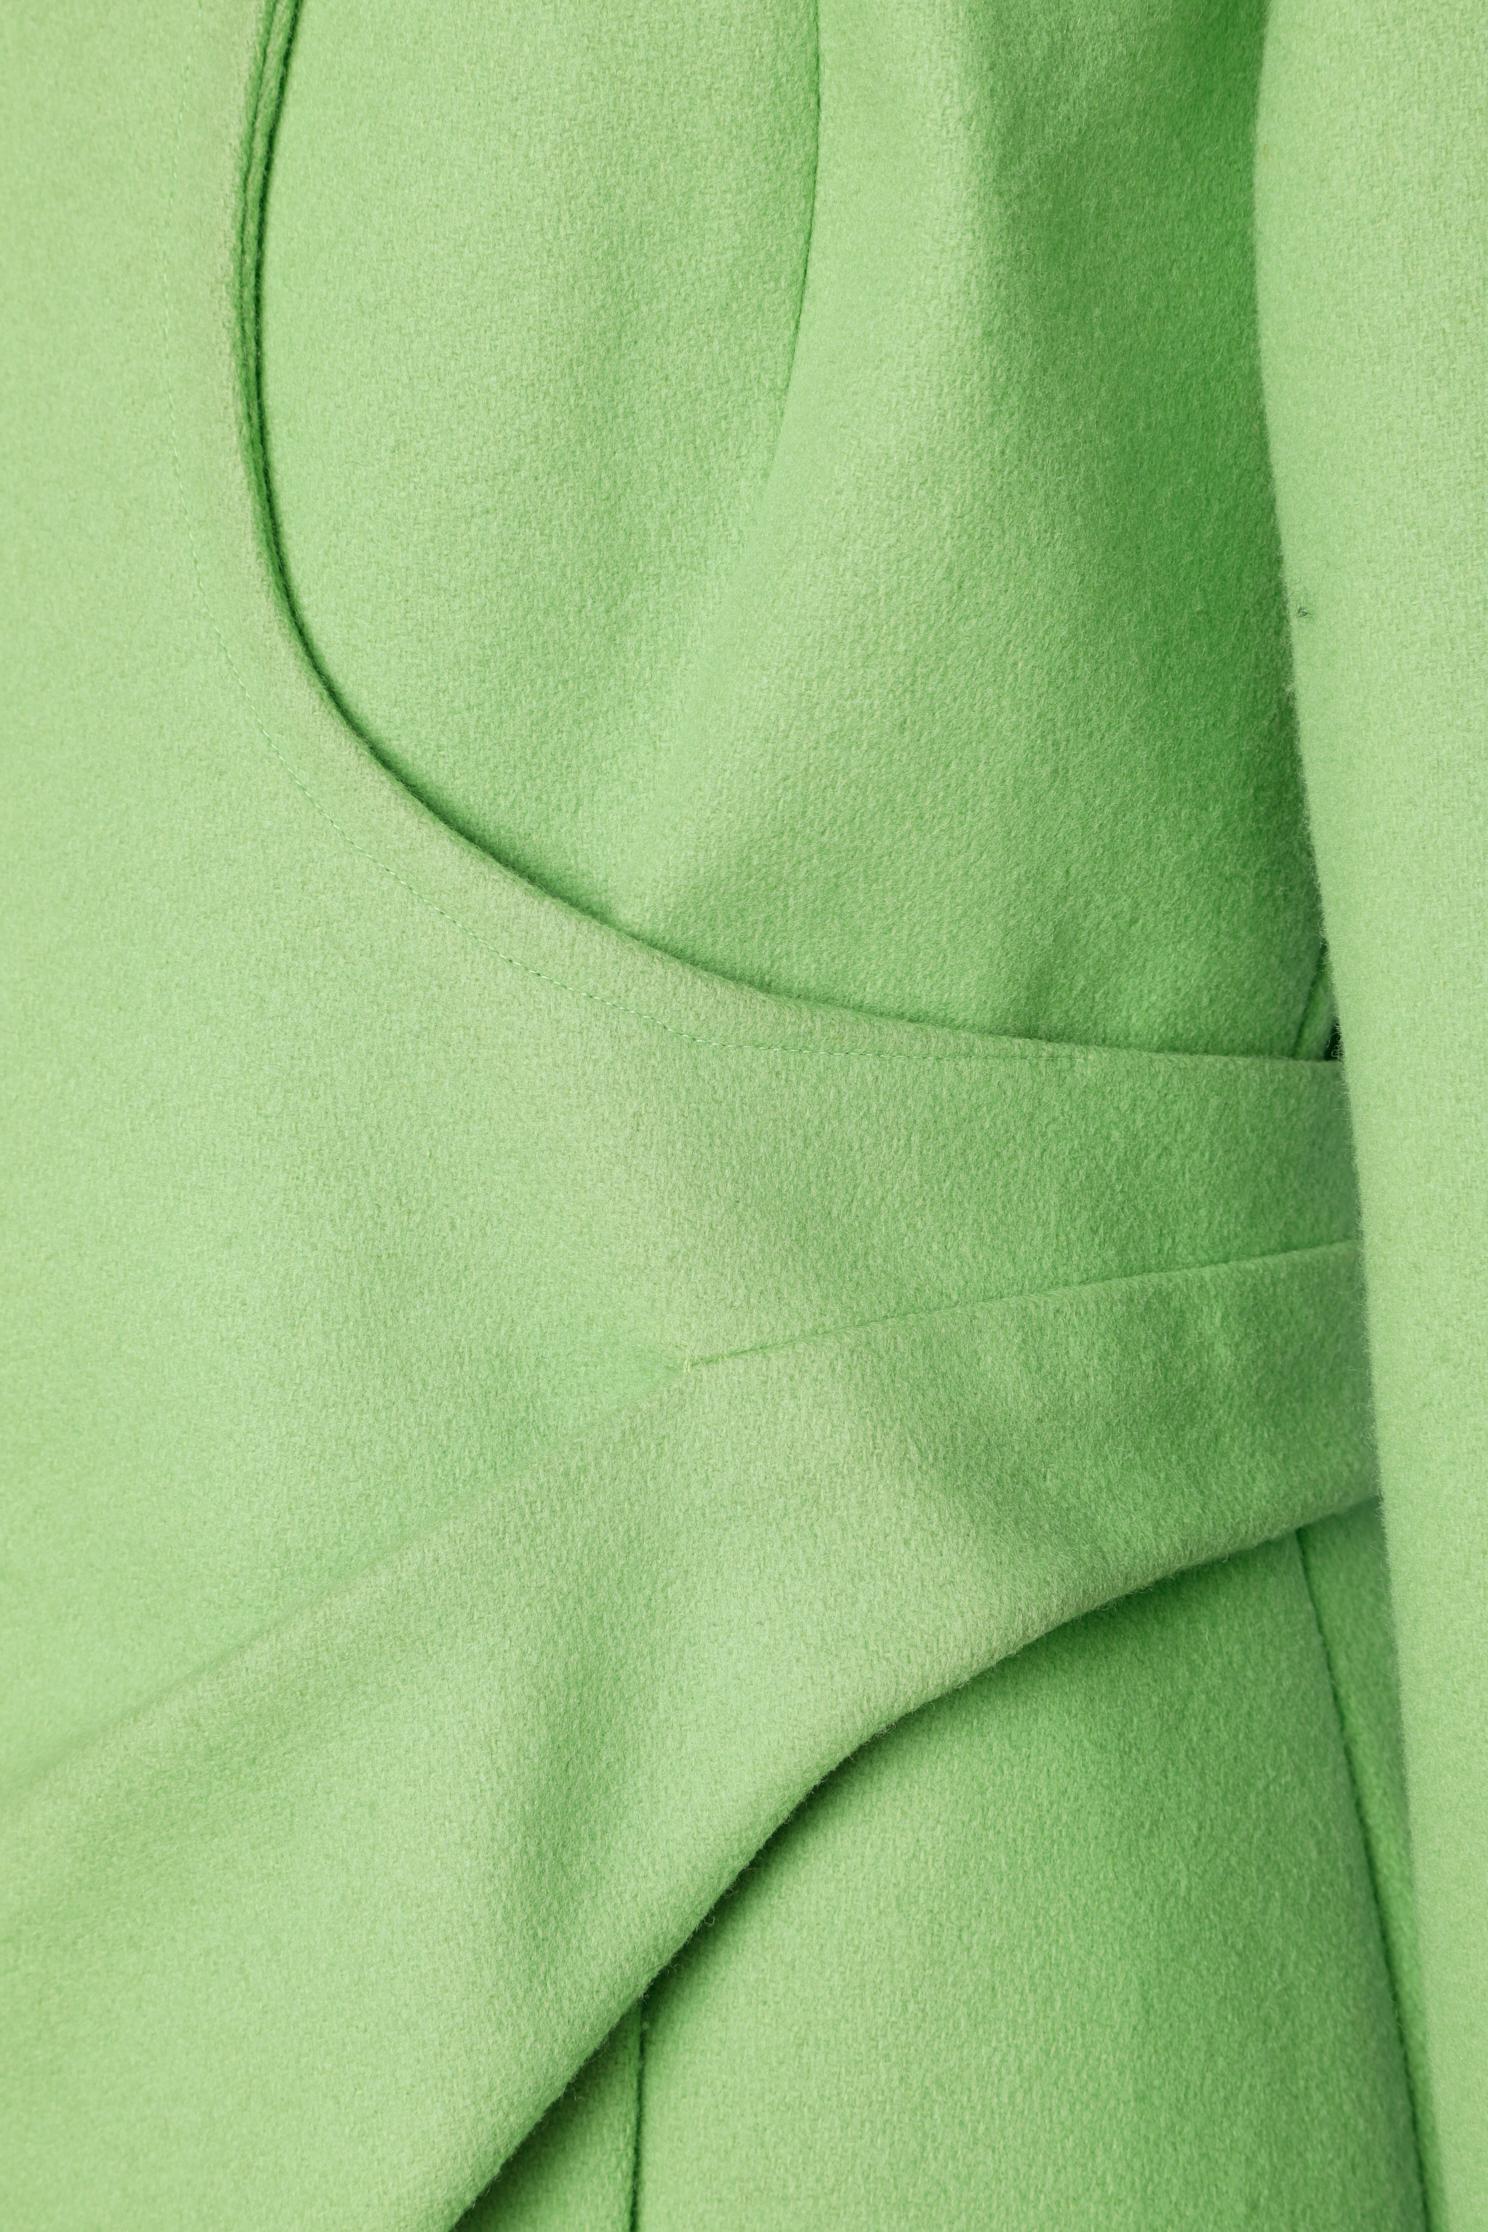 apple green wool coat